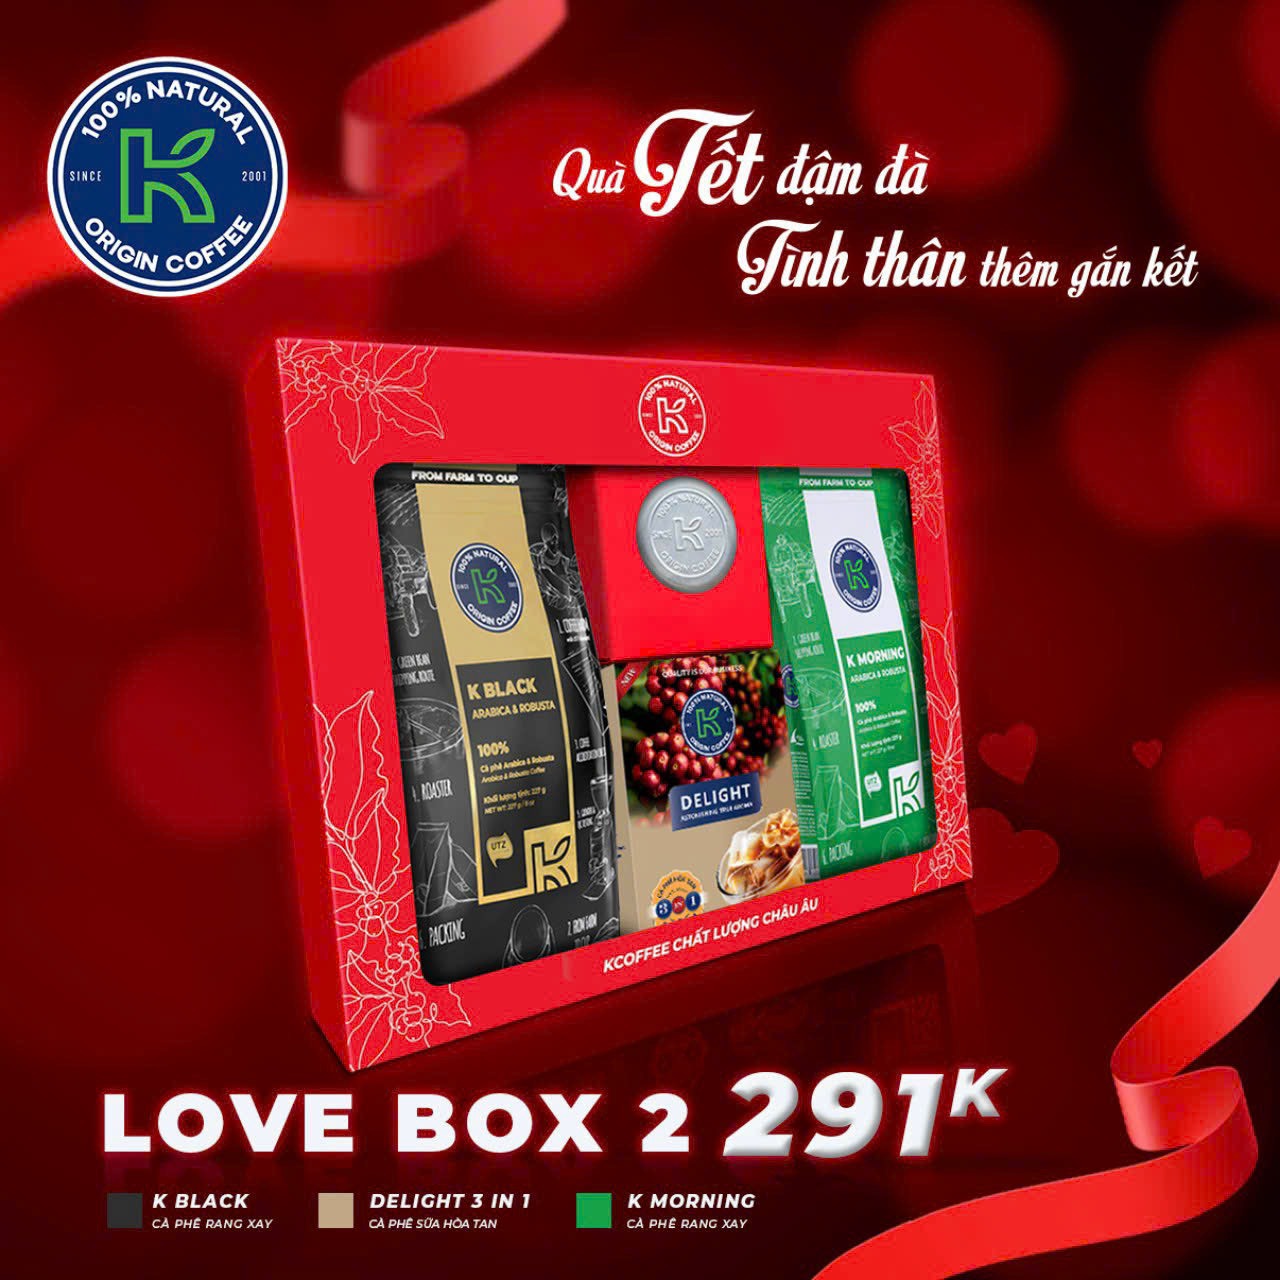 GIFTSET LOVE BOX 2